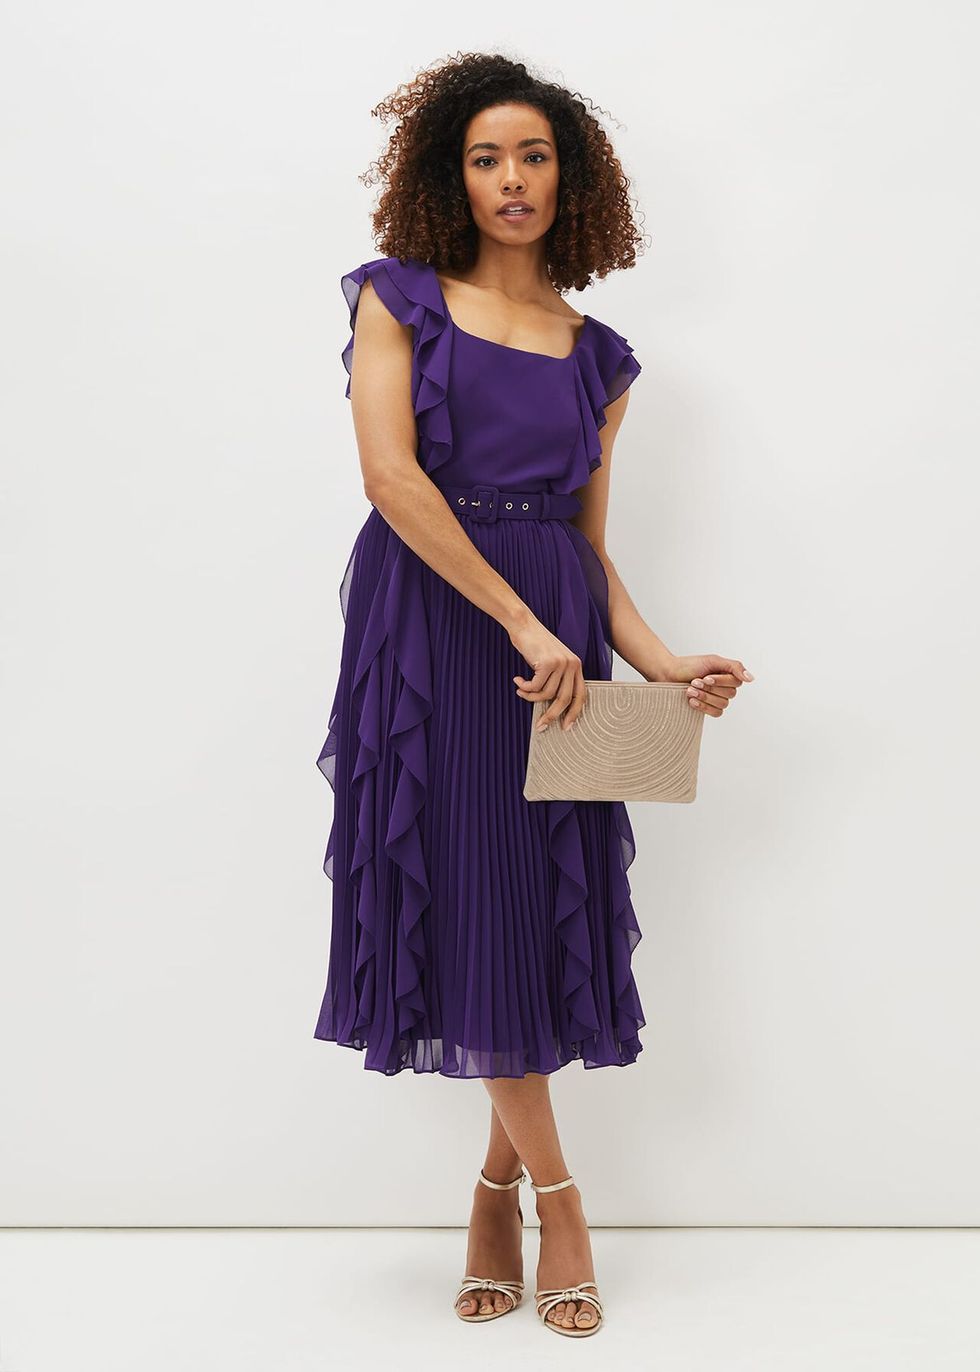 Violet pleated dress